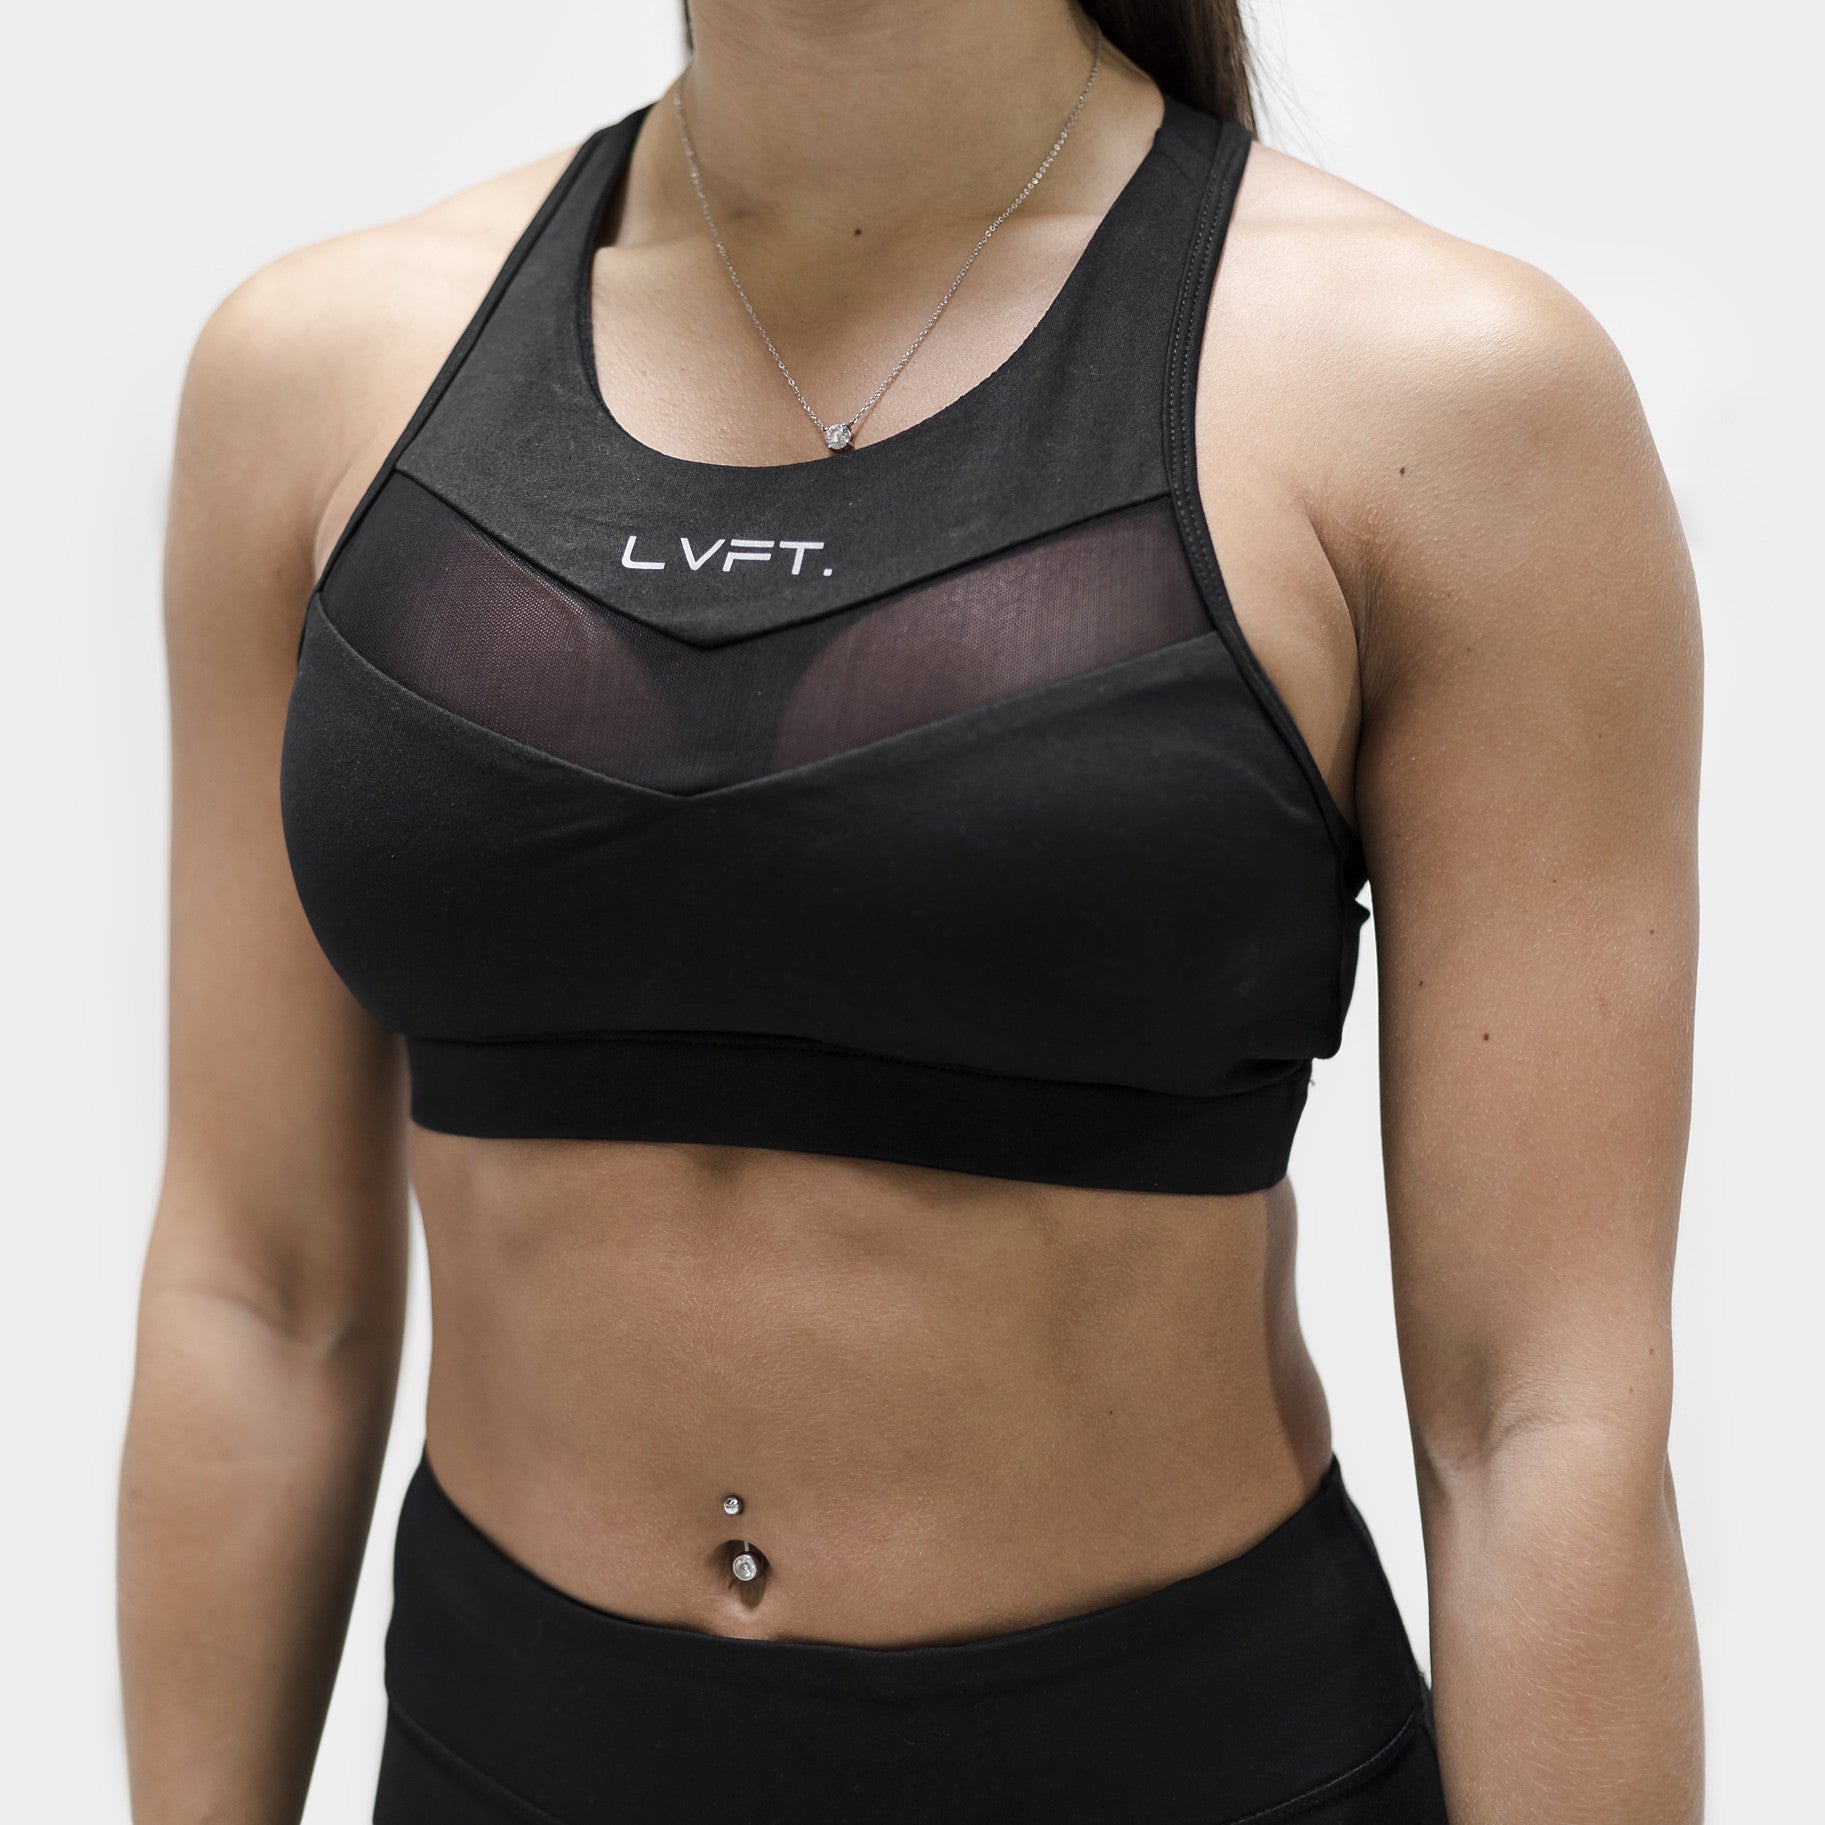 Black sports bra with mesh and padding